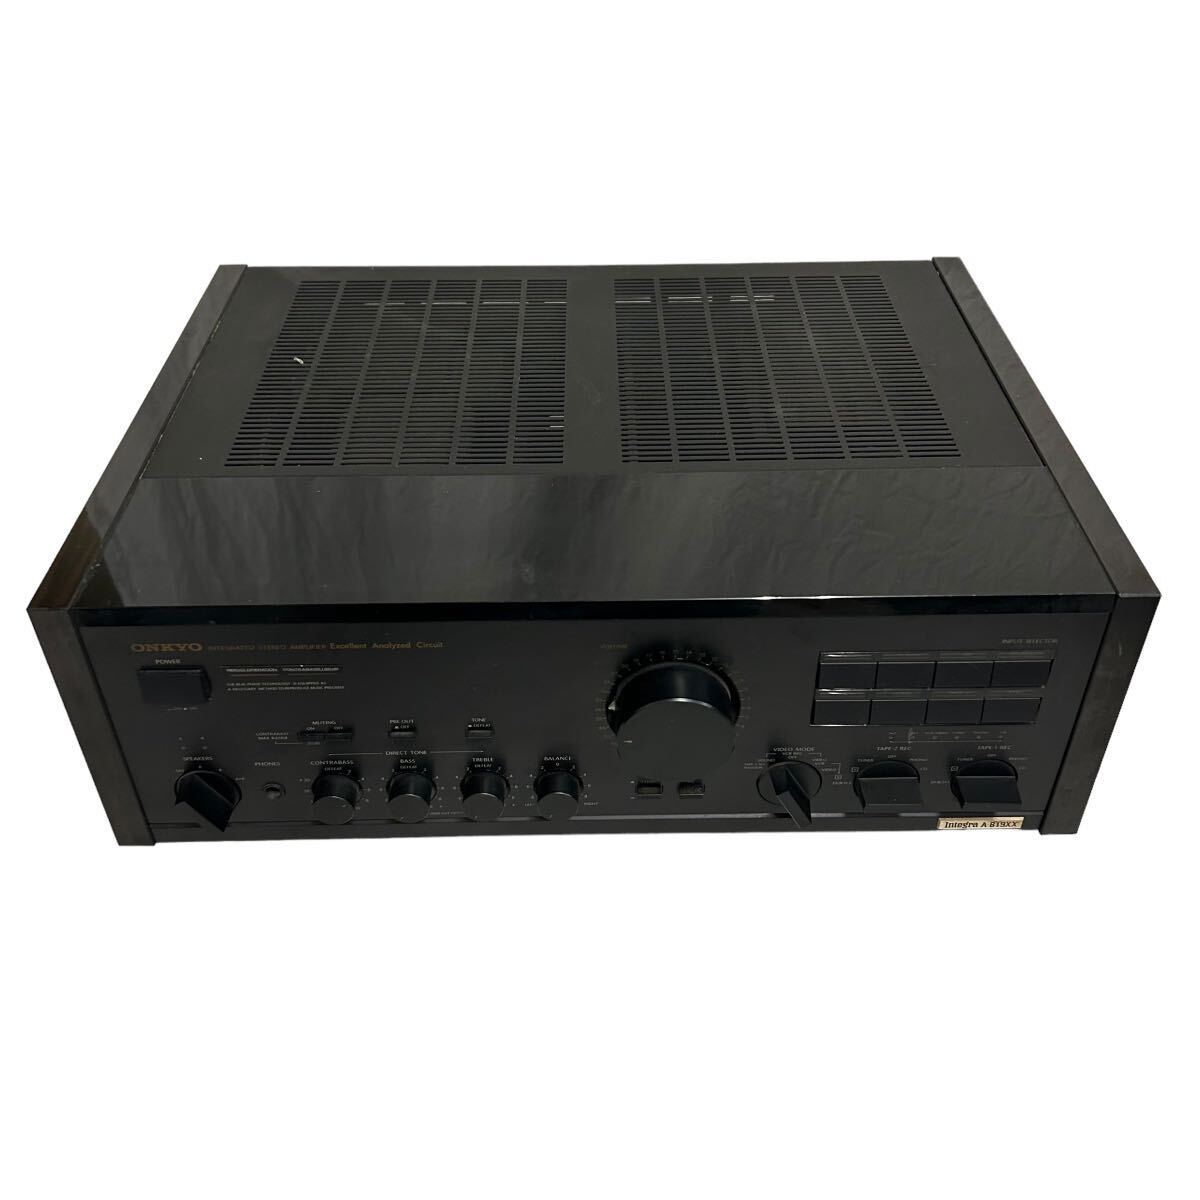 ONKYO pre-main amplifier A-819XX Integra Onkyo audio equipment sound equipment black 